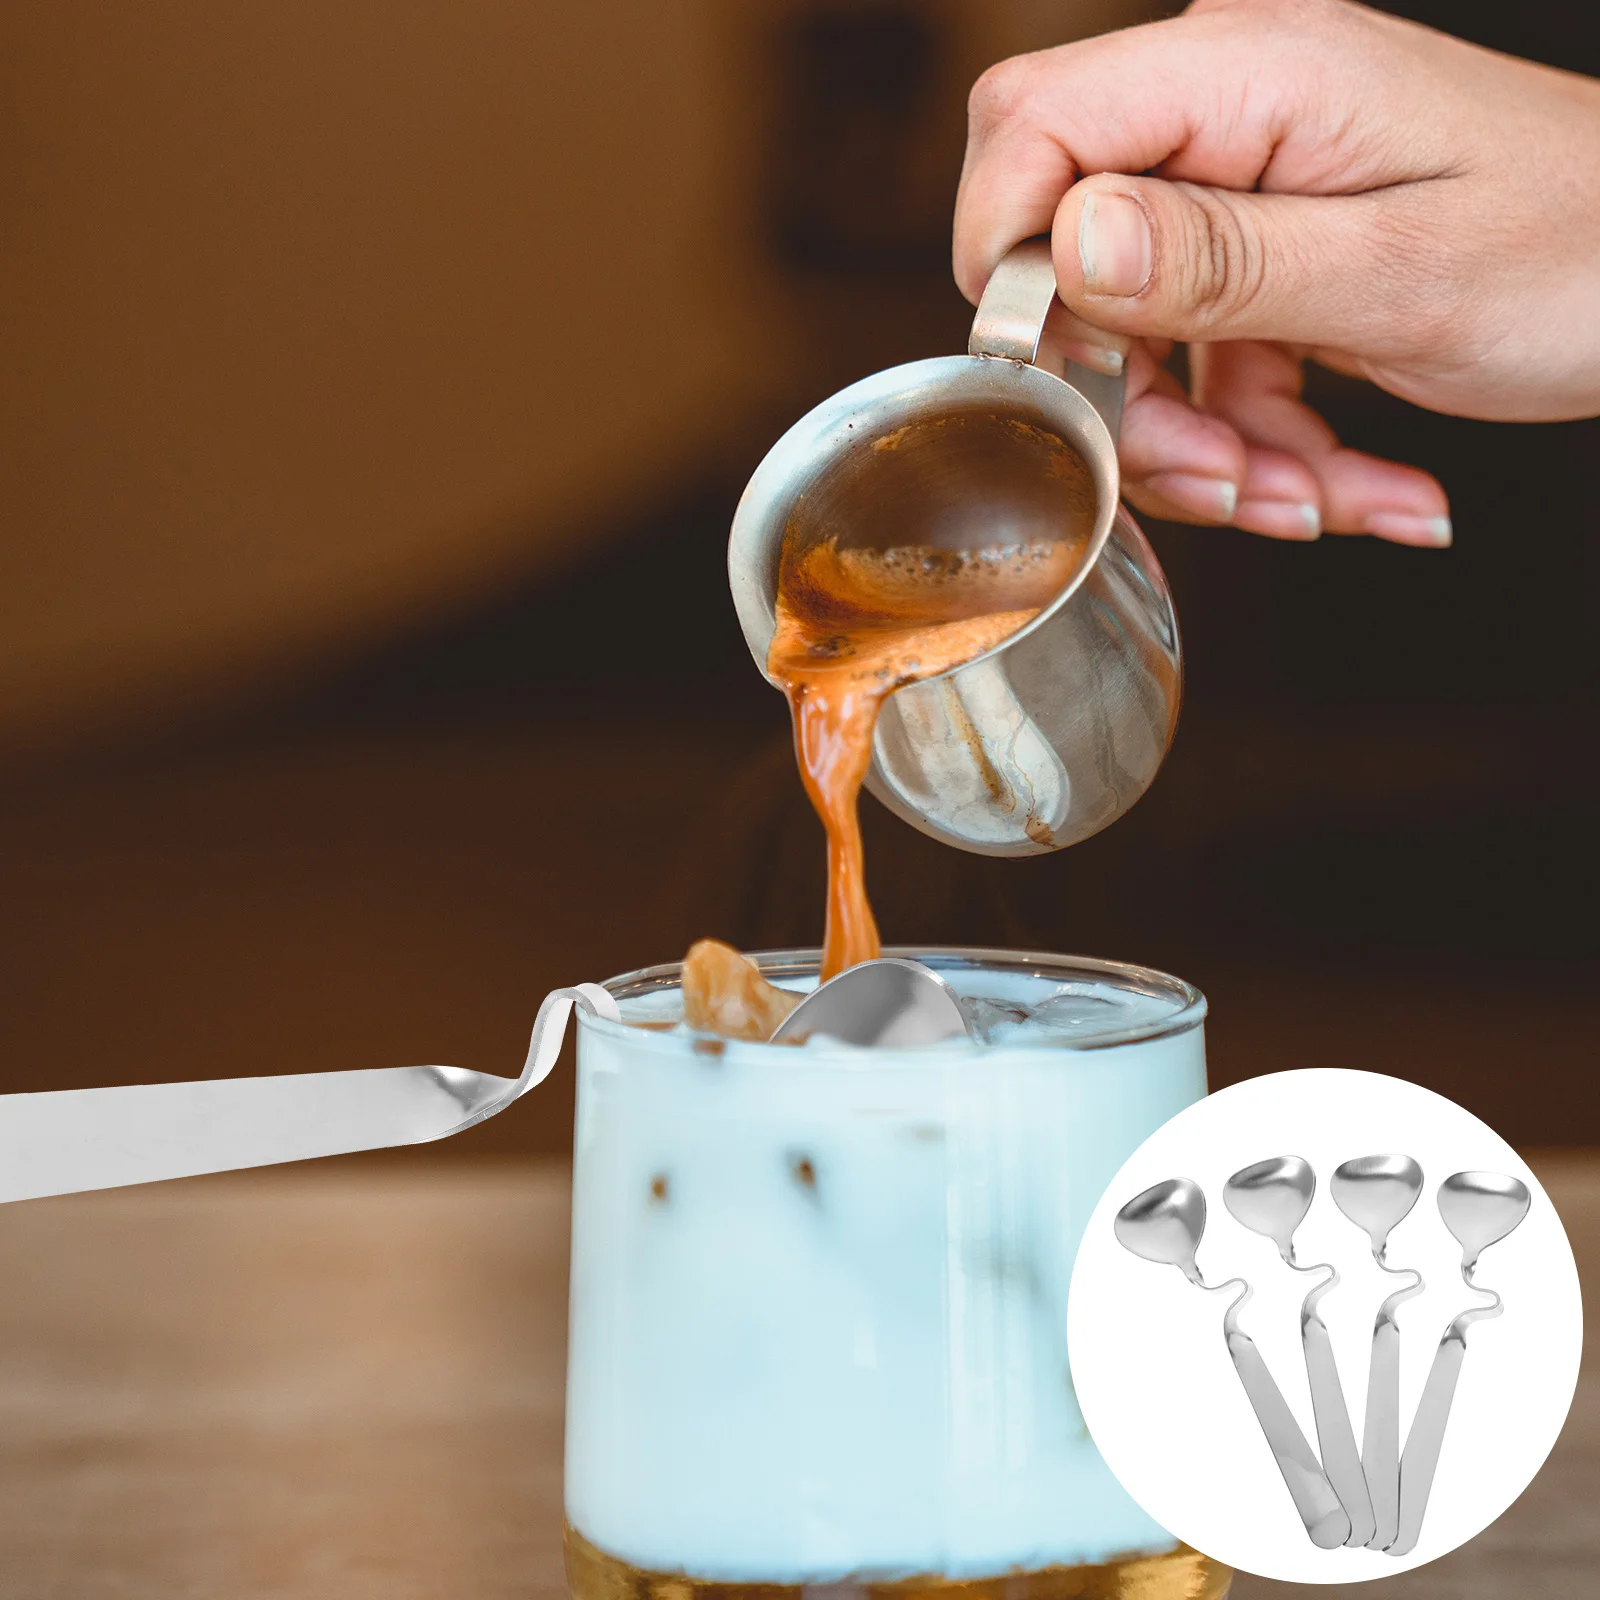 

4 Pcs Honey Mixing Spoon Curving Handle Coffee Scoop Long Spoons Tableware Premium Tea Curved Food Grade Silver